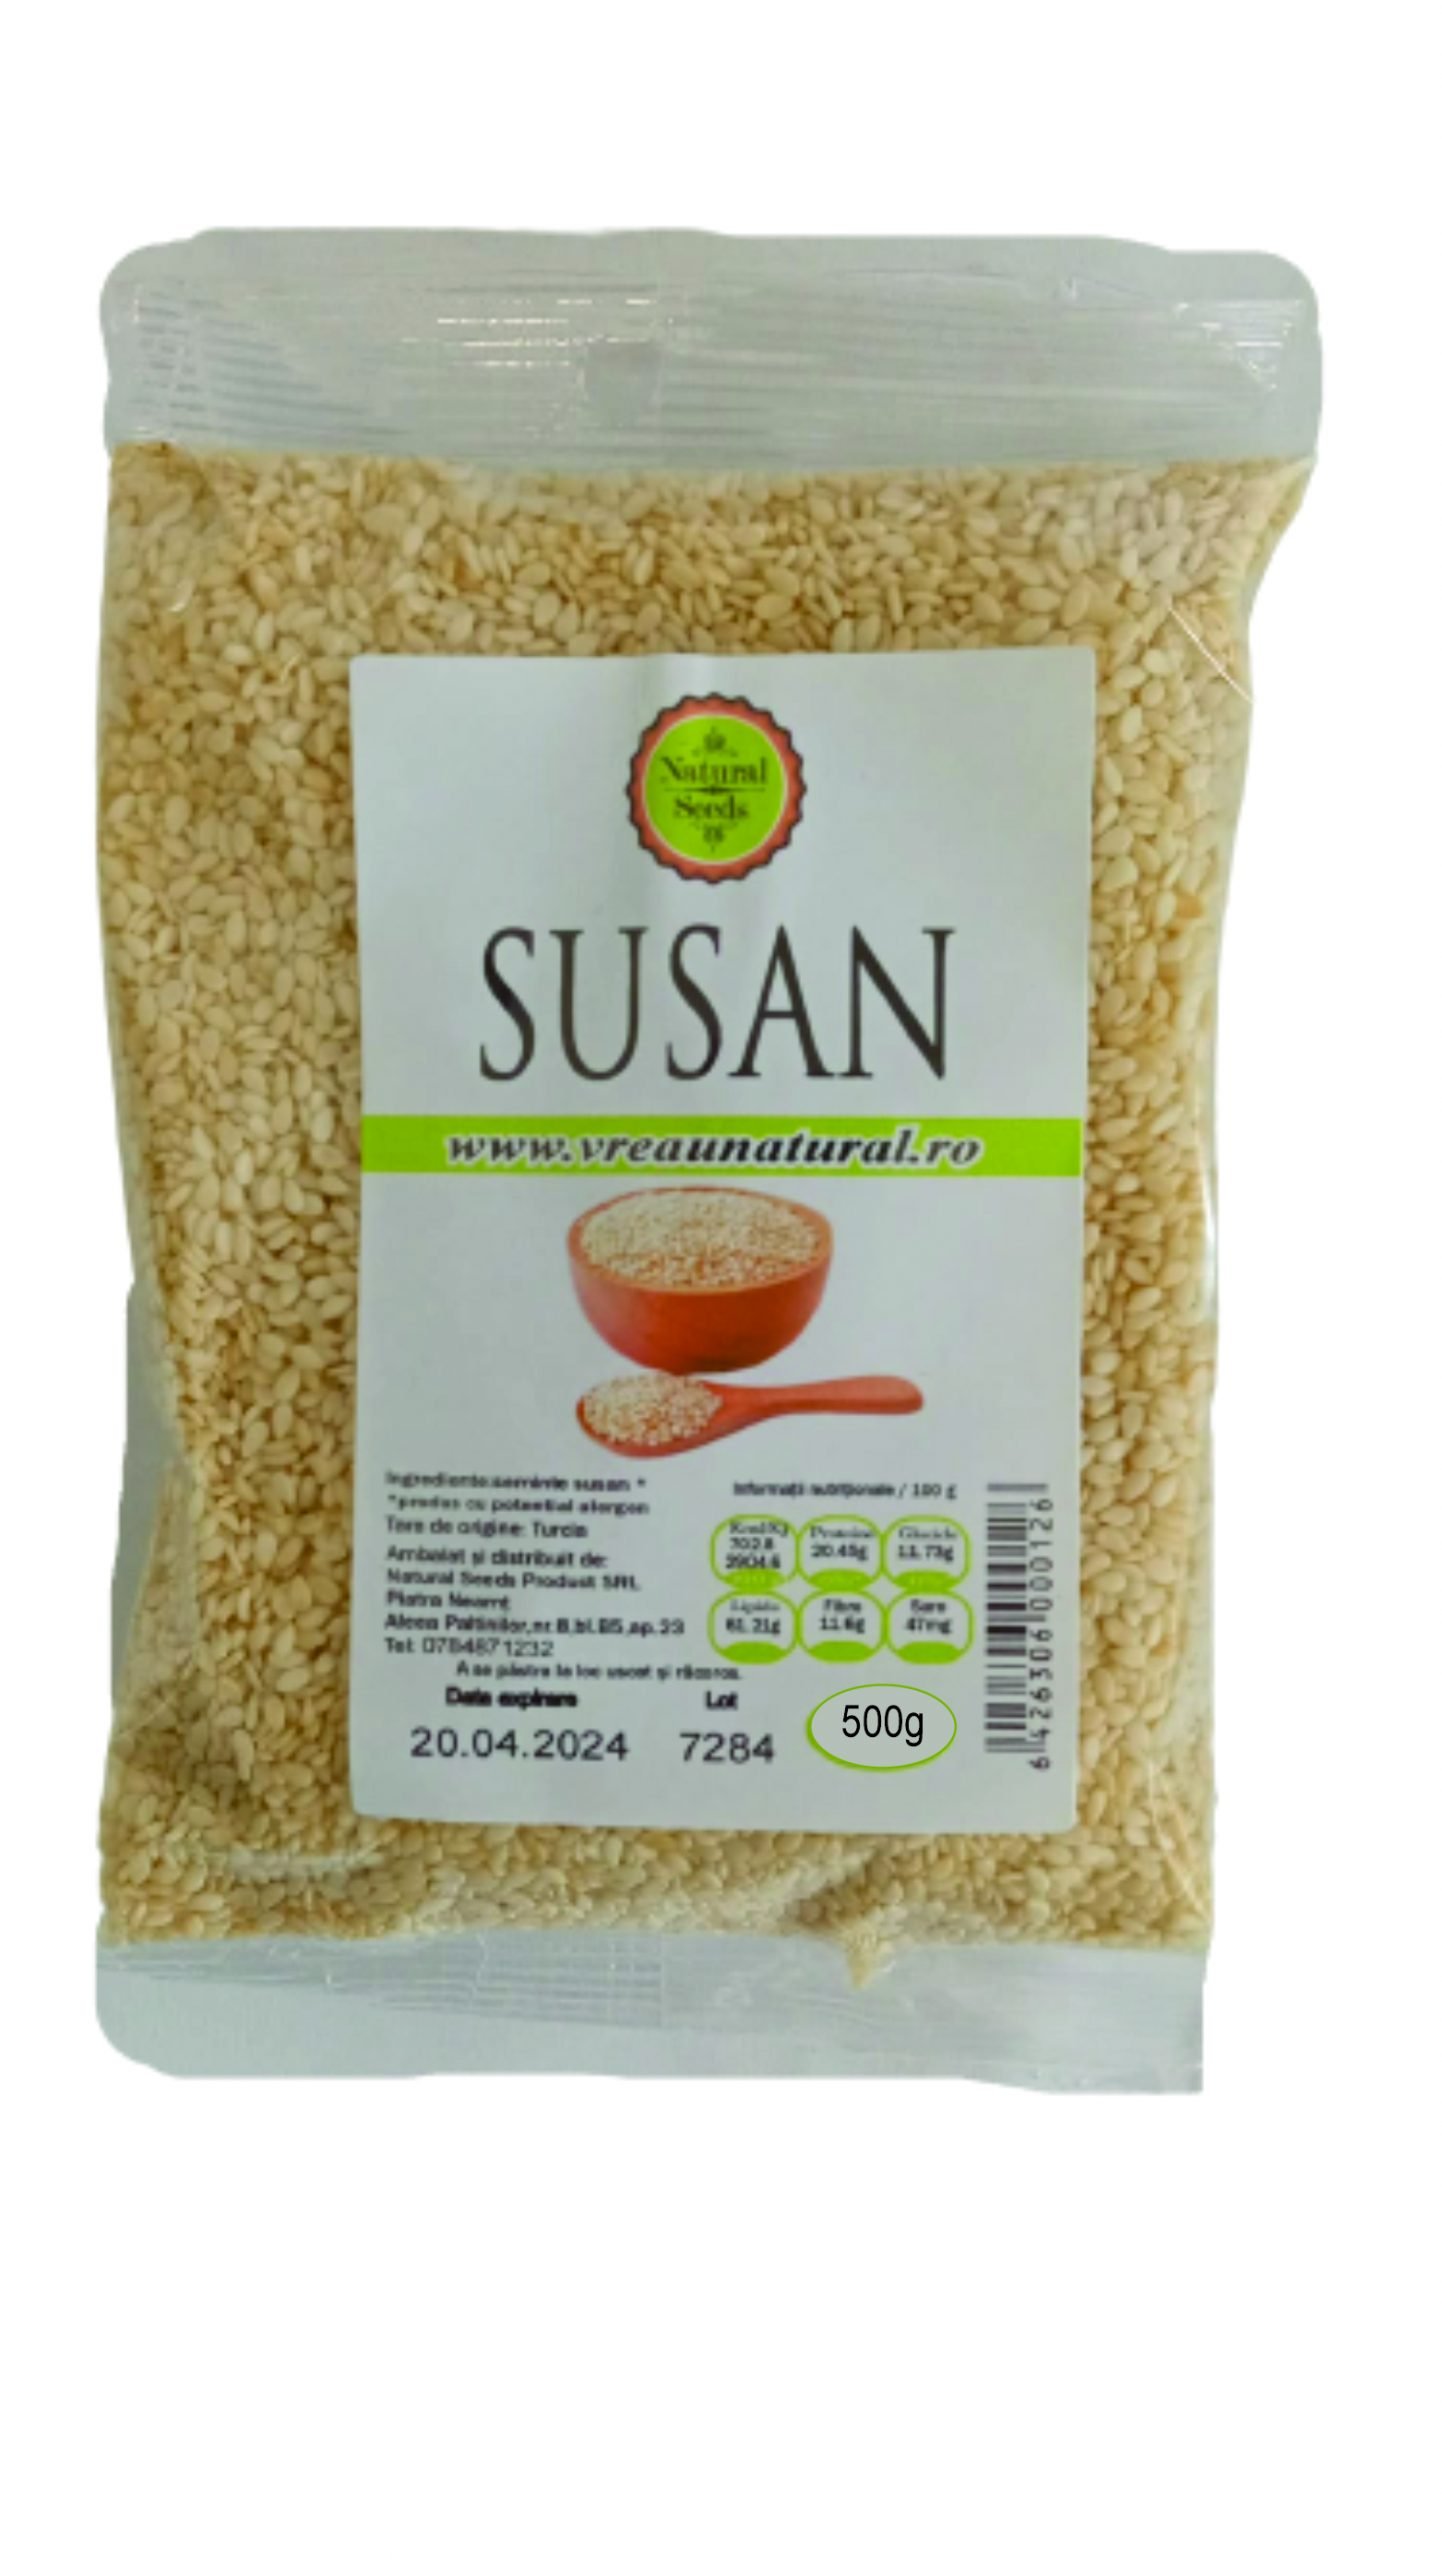 Susan alb, Natural Seeds Product - v2